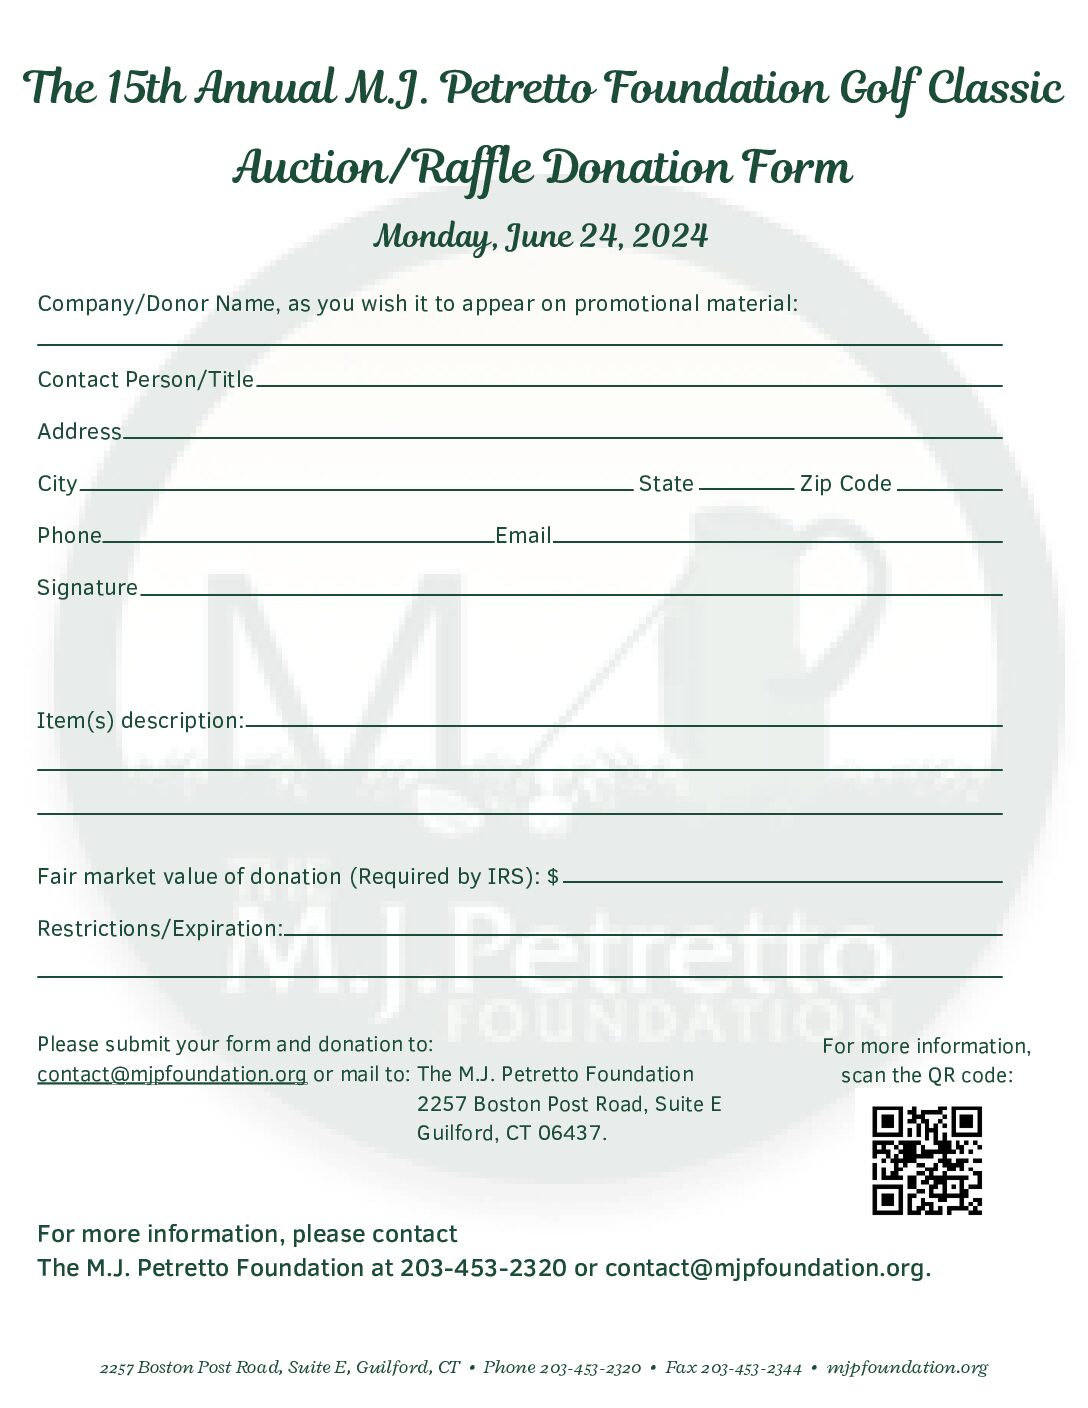 MJPF AuctionRaffle Donation Form